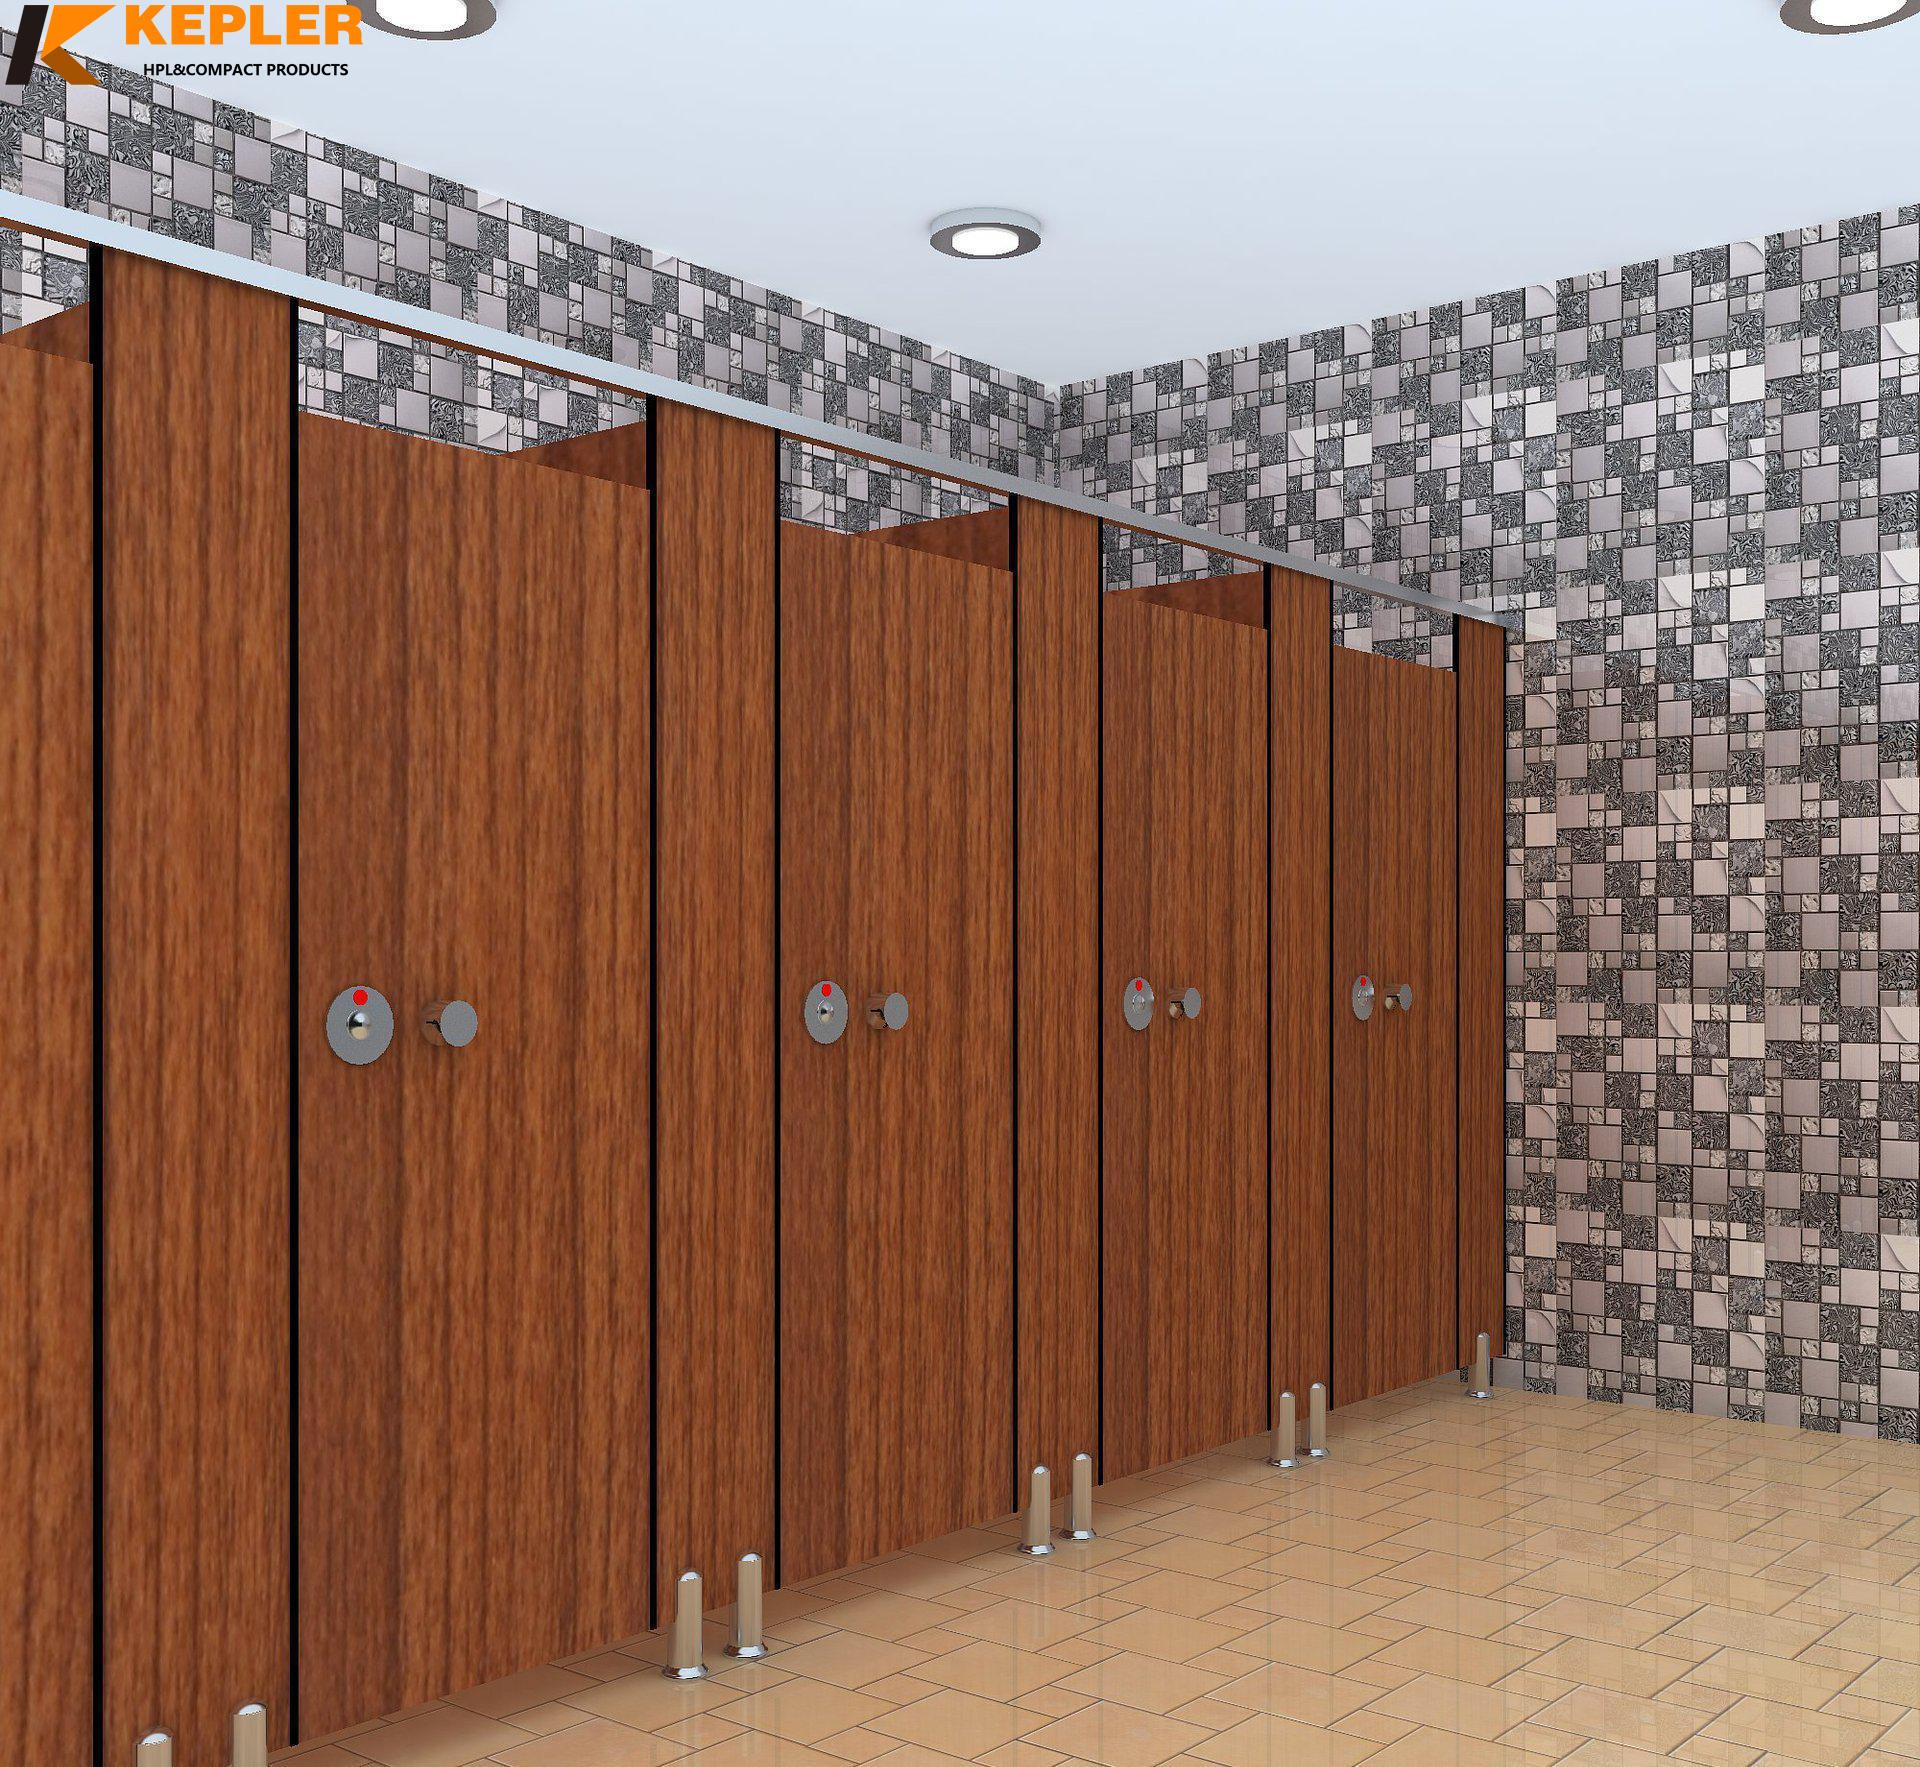  Kepler hpl compact laminate toilet cubicle partition system Kepler hpl compact laminate toilet cubicle partition system